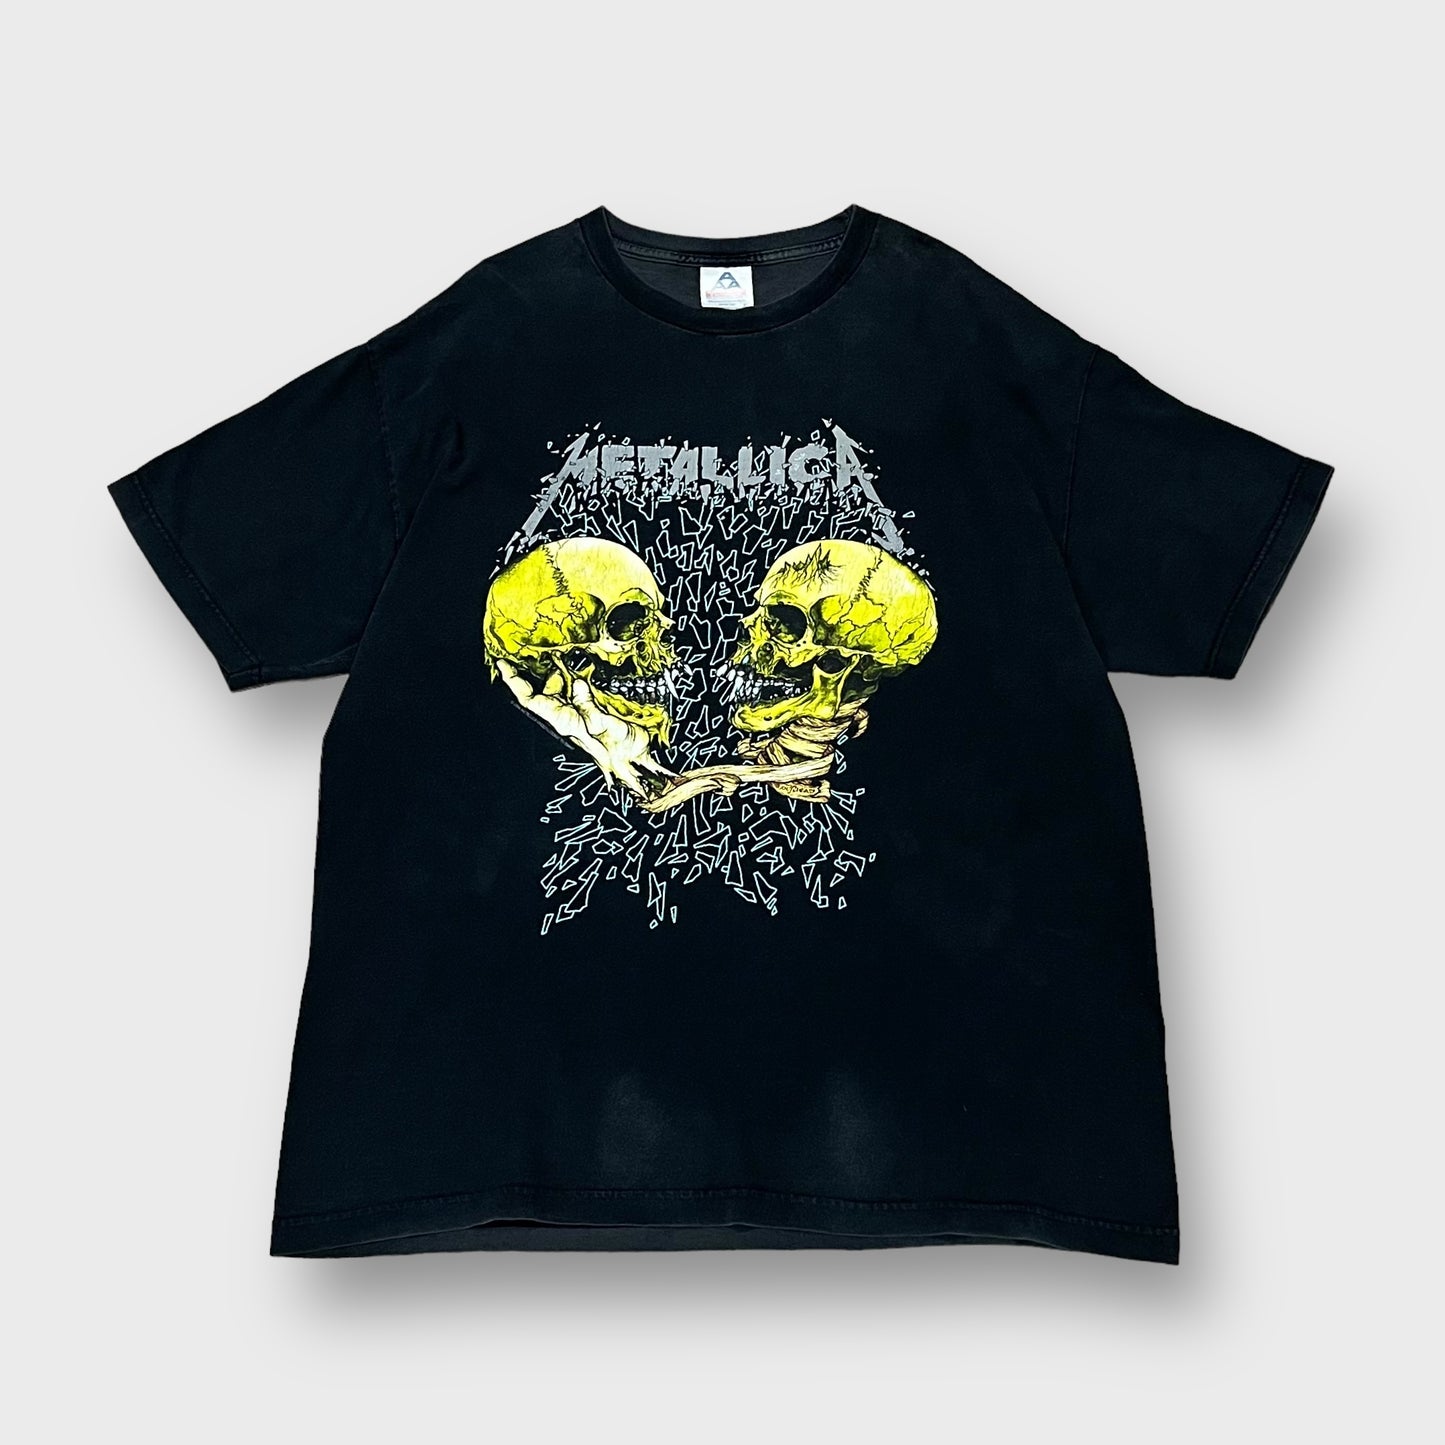 1991 METALLICA
“sad but true” song t-shirt